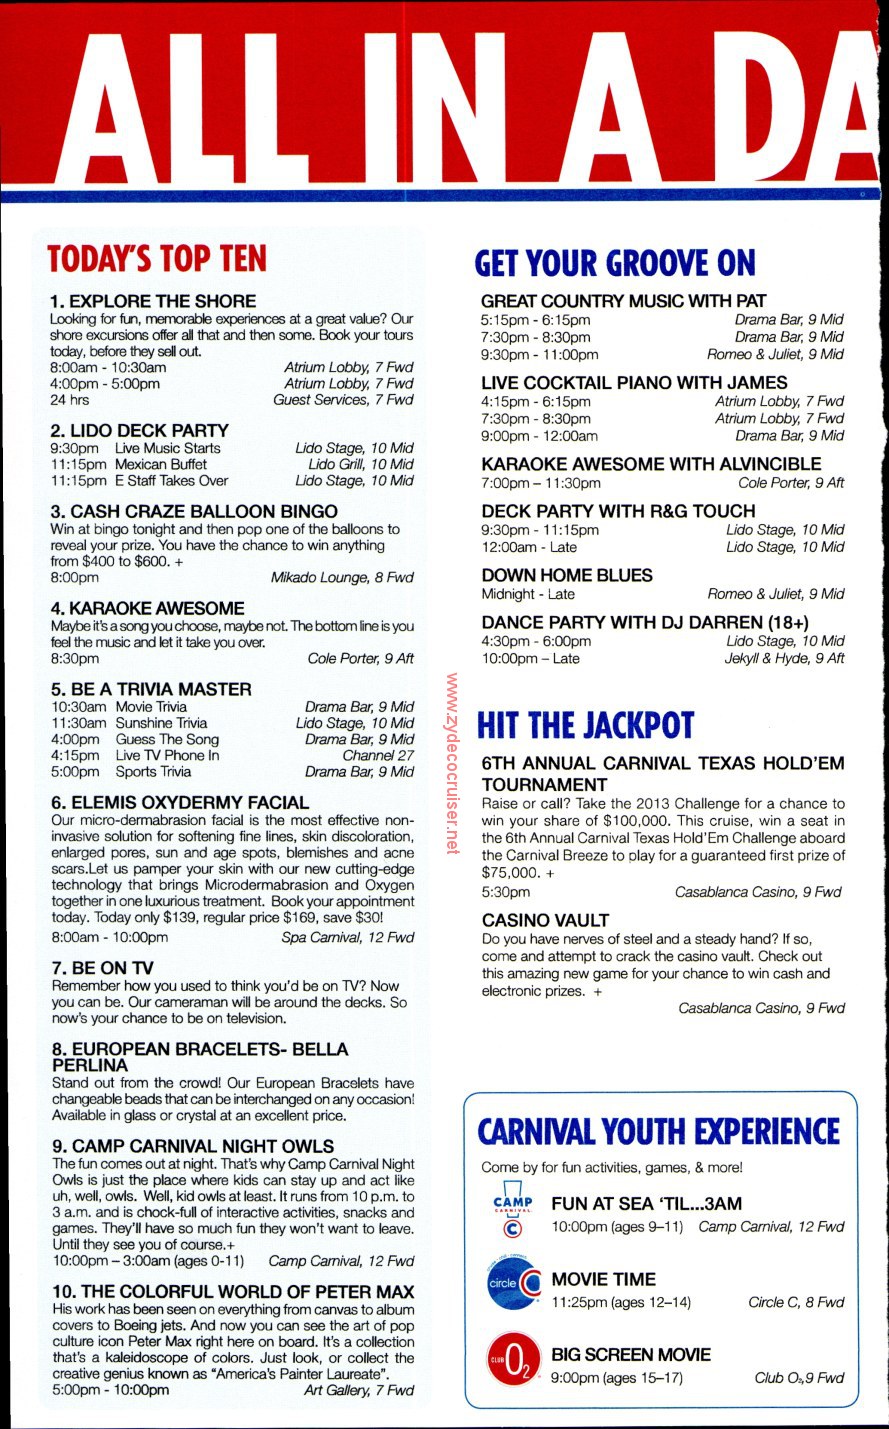 020: Carnival Elation 5 Day Fun Times, Feb 7, 2013, Page 2, 